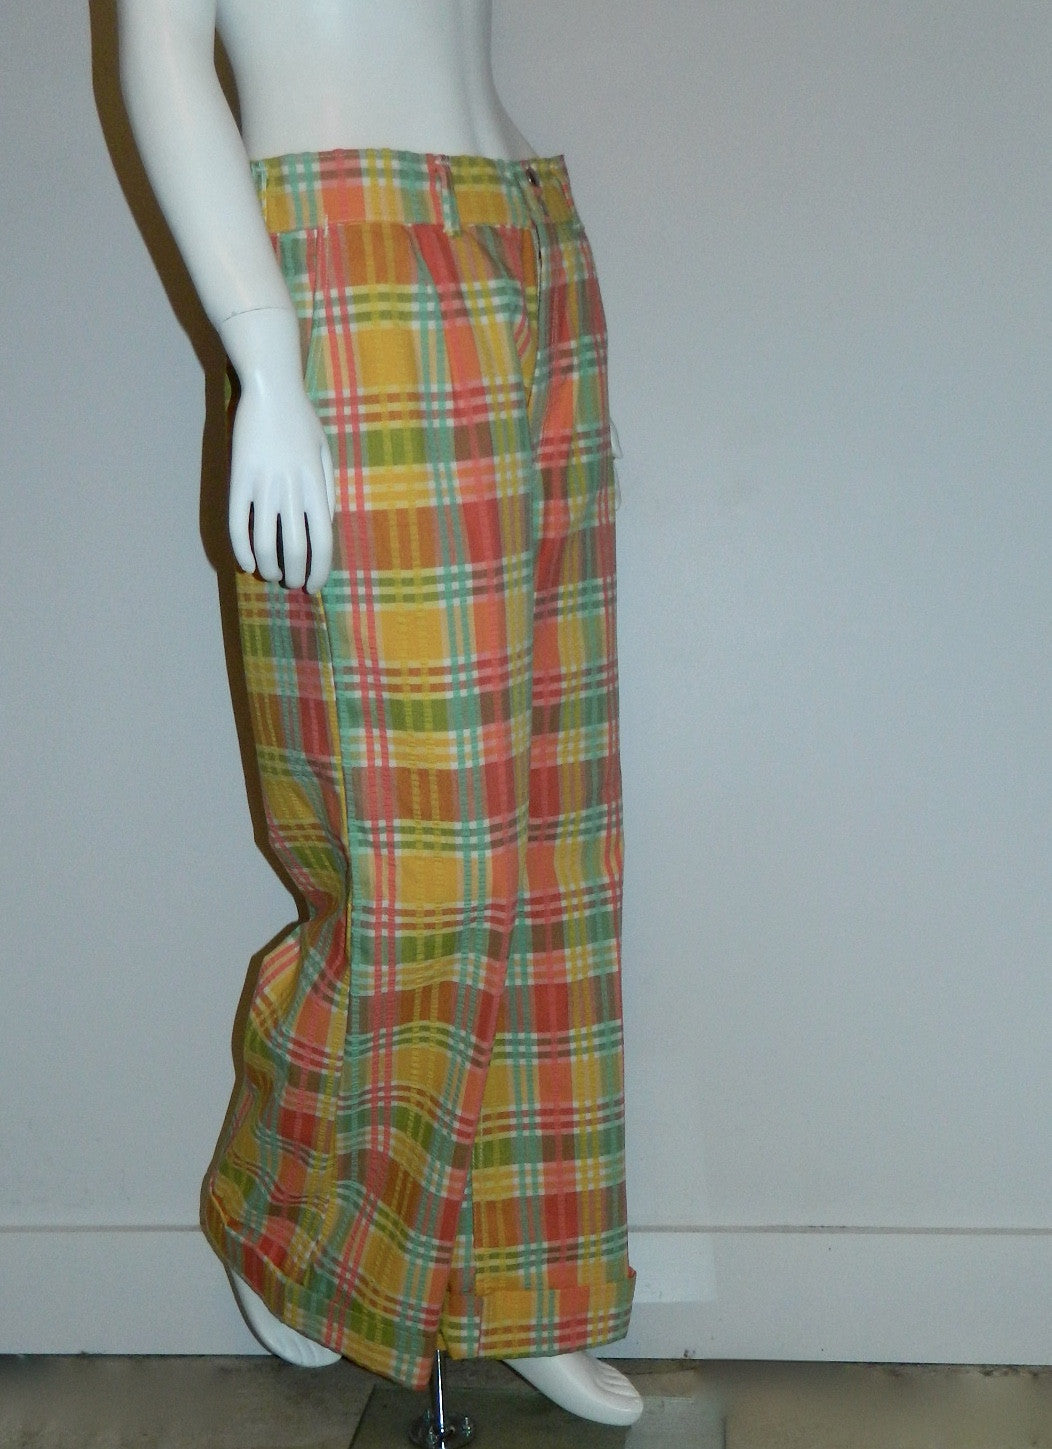 vintage plaid seersucker pants / 1970s pastel Wrangler jeans / wide leg cuffed trousers